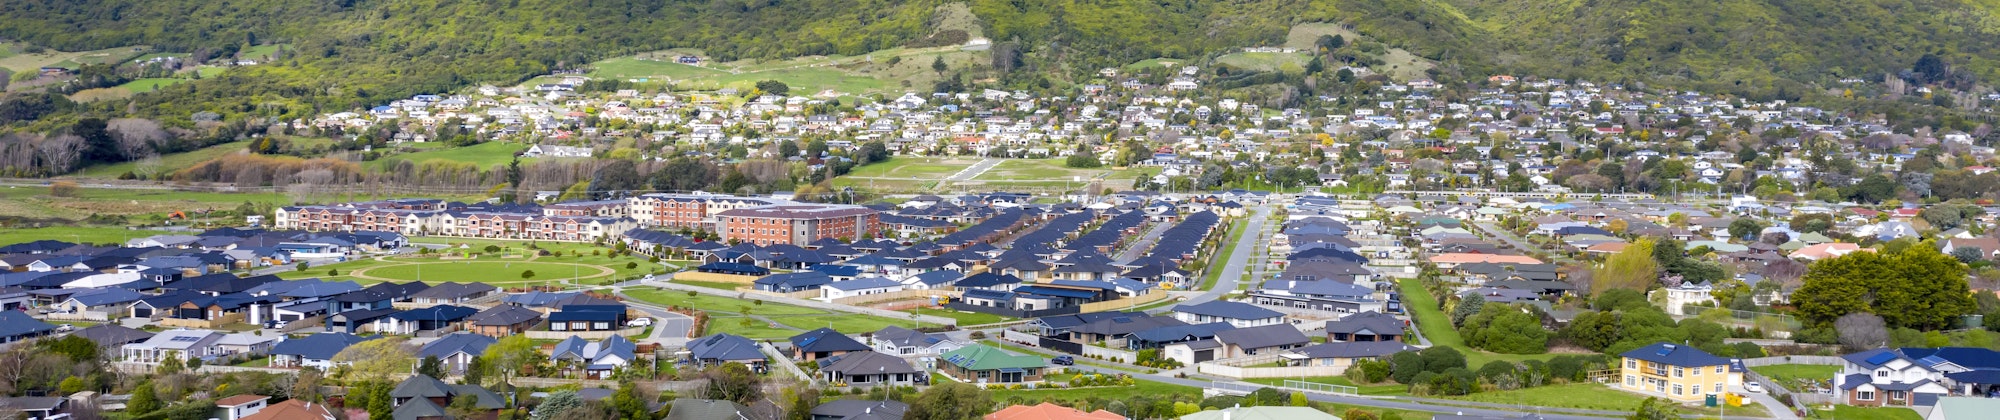 Medium density development in Kāpiti | The Property Group NZ